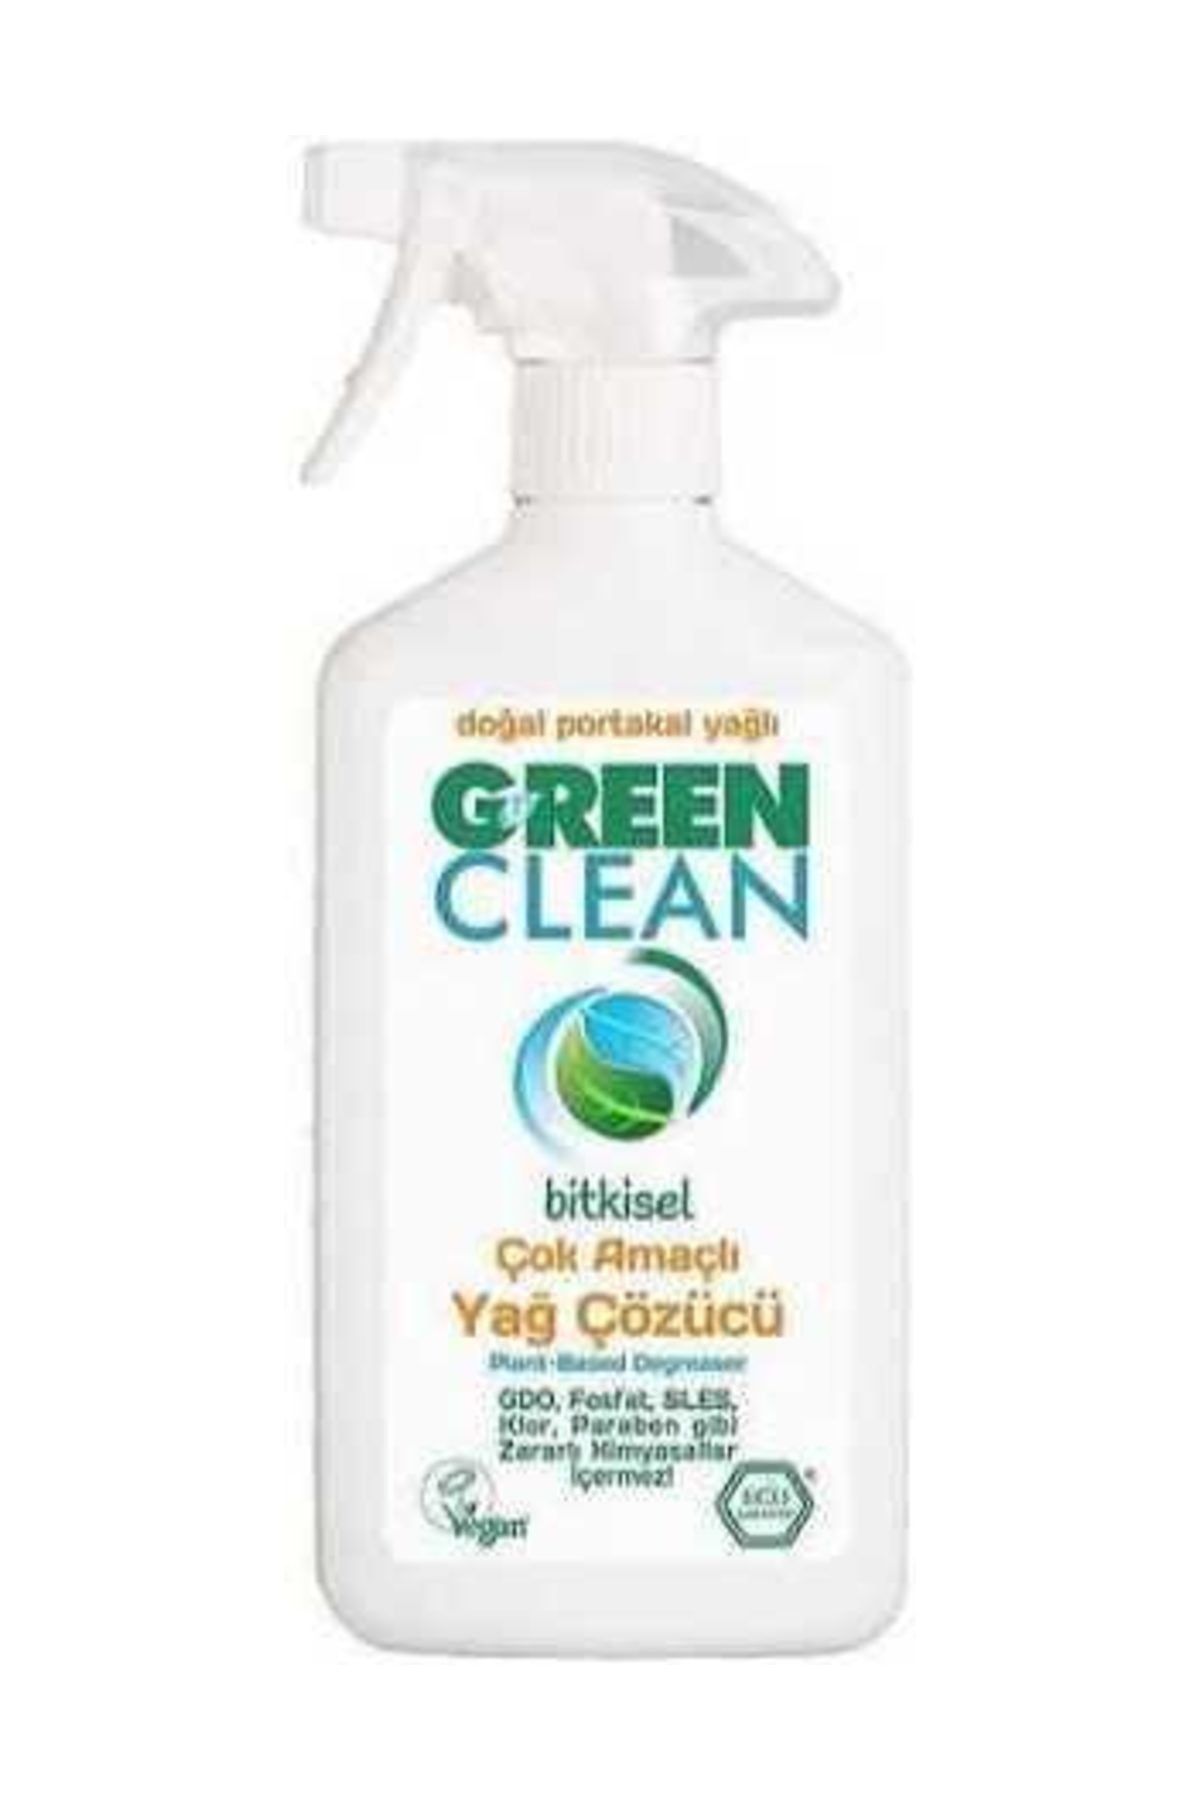 U Green Clean Organik Portakal Yağlı 500 ml Çok Amaçlı Yağ Çözücü